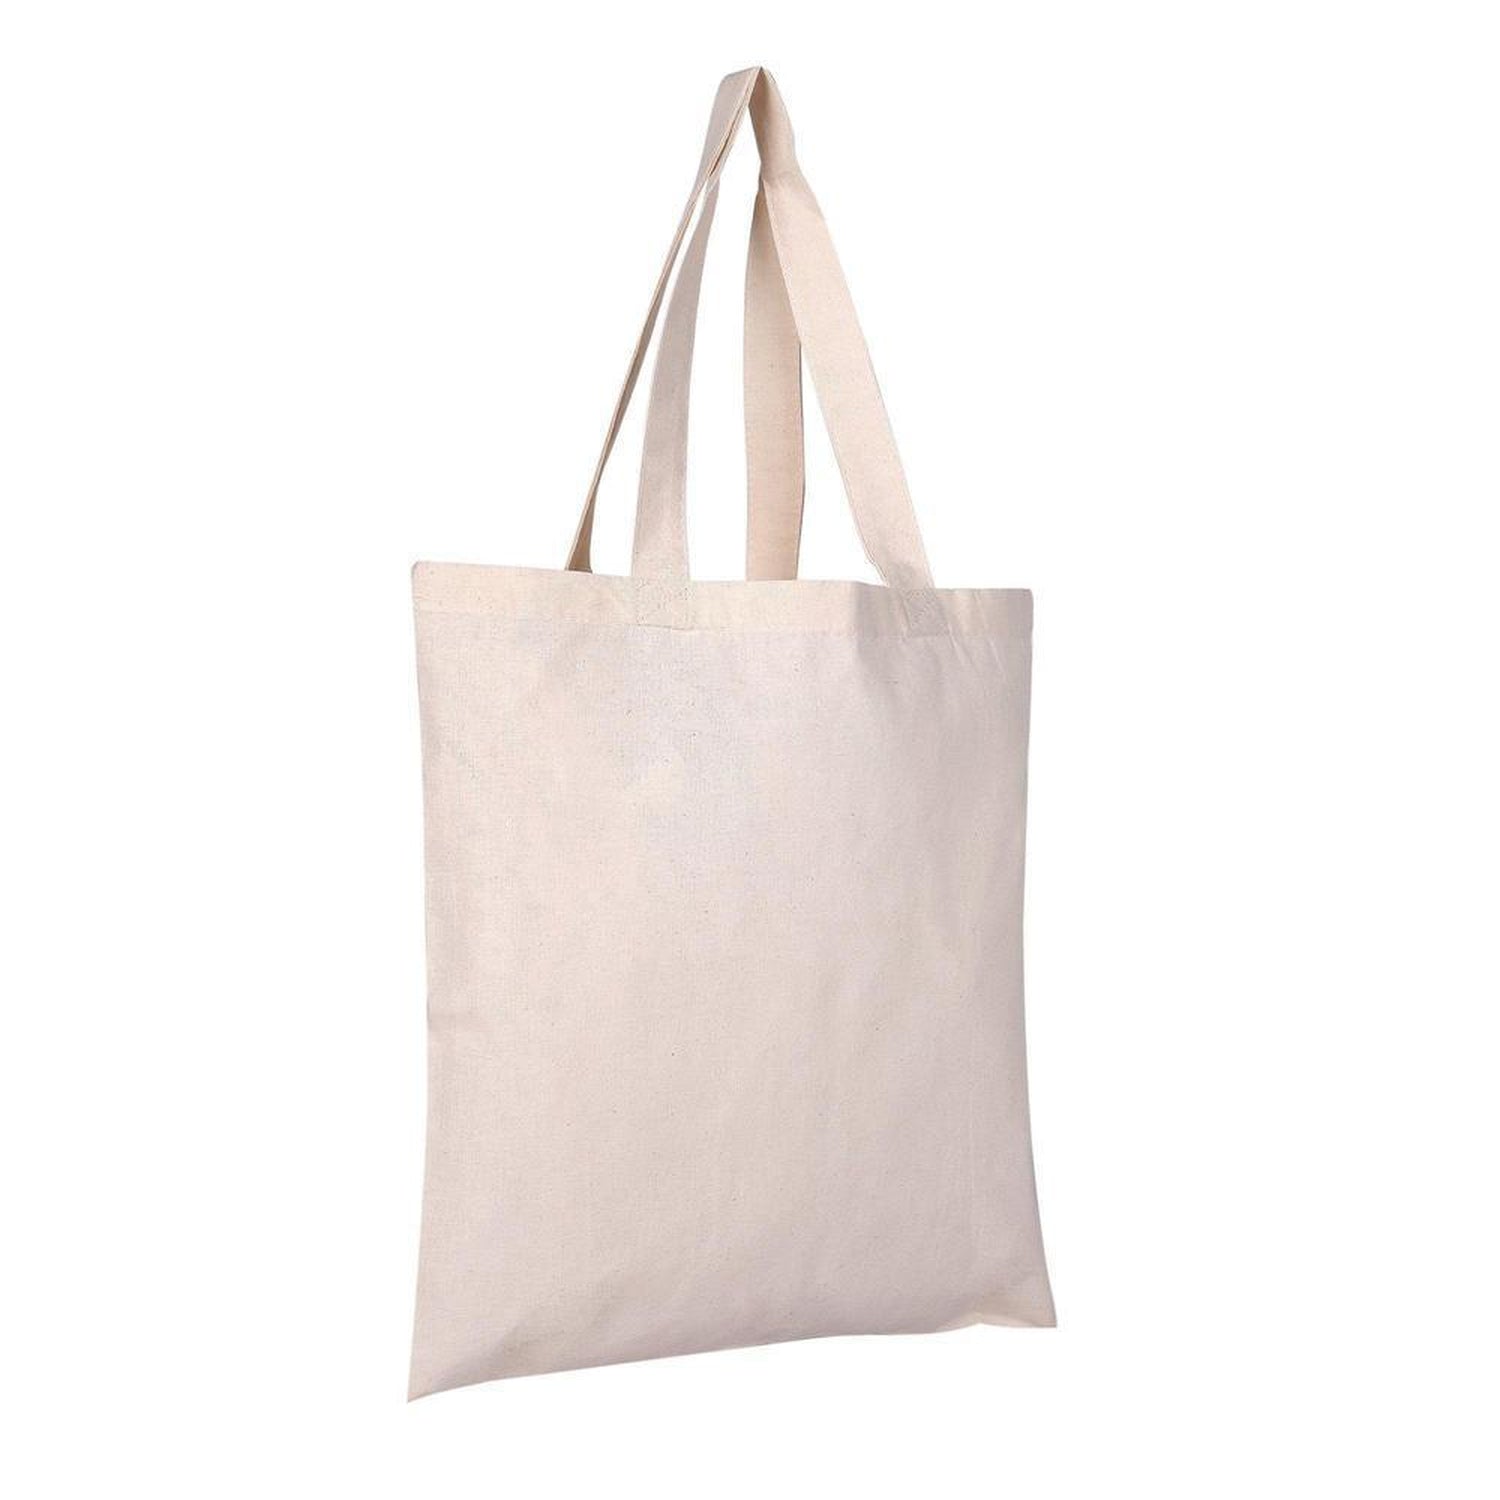 Bulk tote bags, Wholesale Tote Bags, Canvas Tote Bags ,Blank (24 Pack